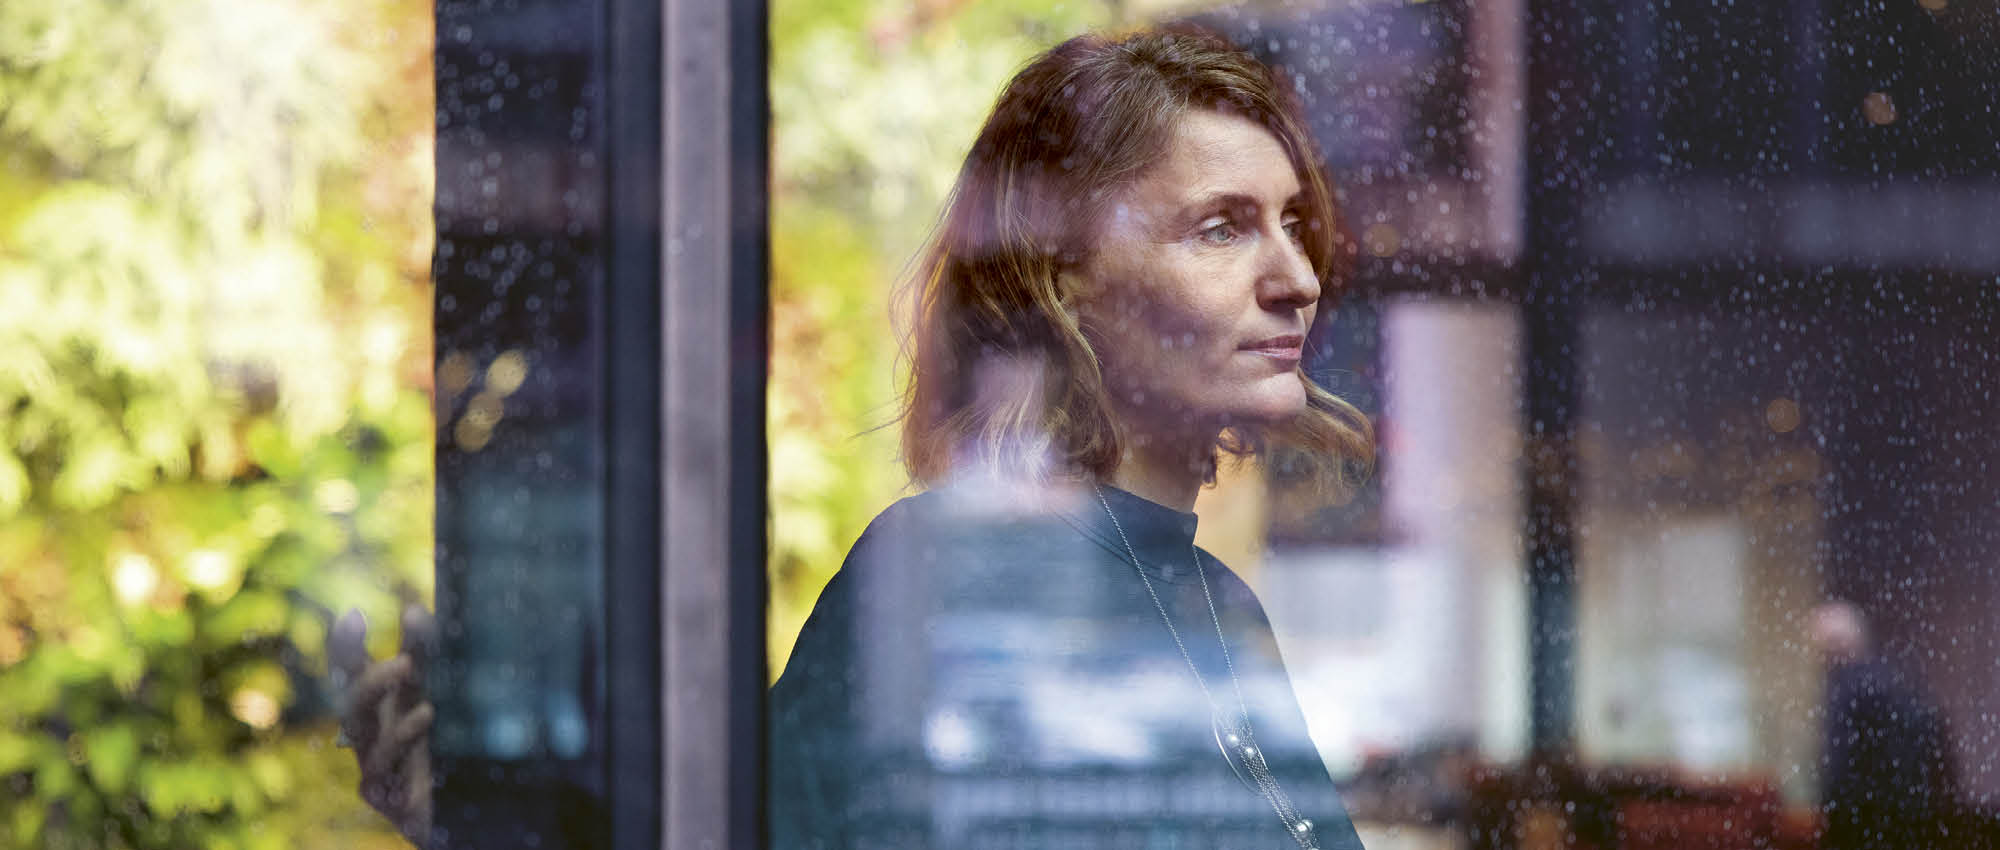 Portrait of a women looking out of a window. 